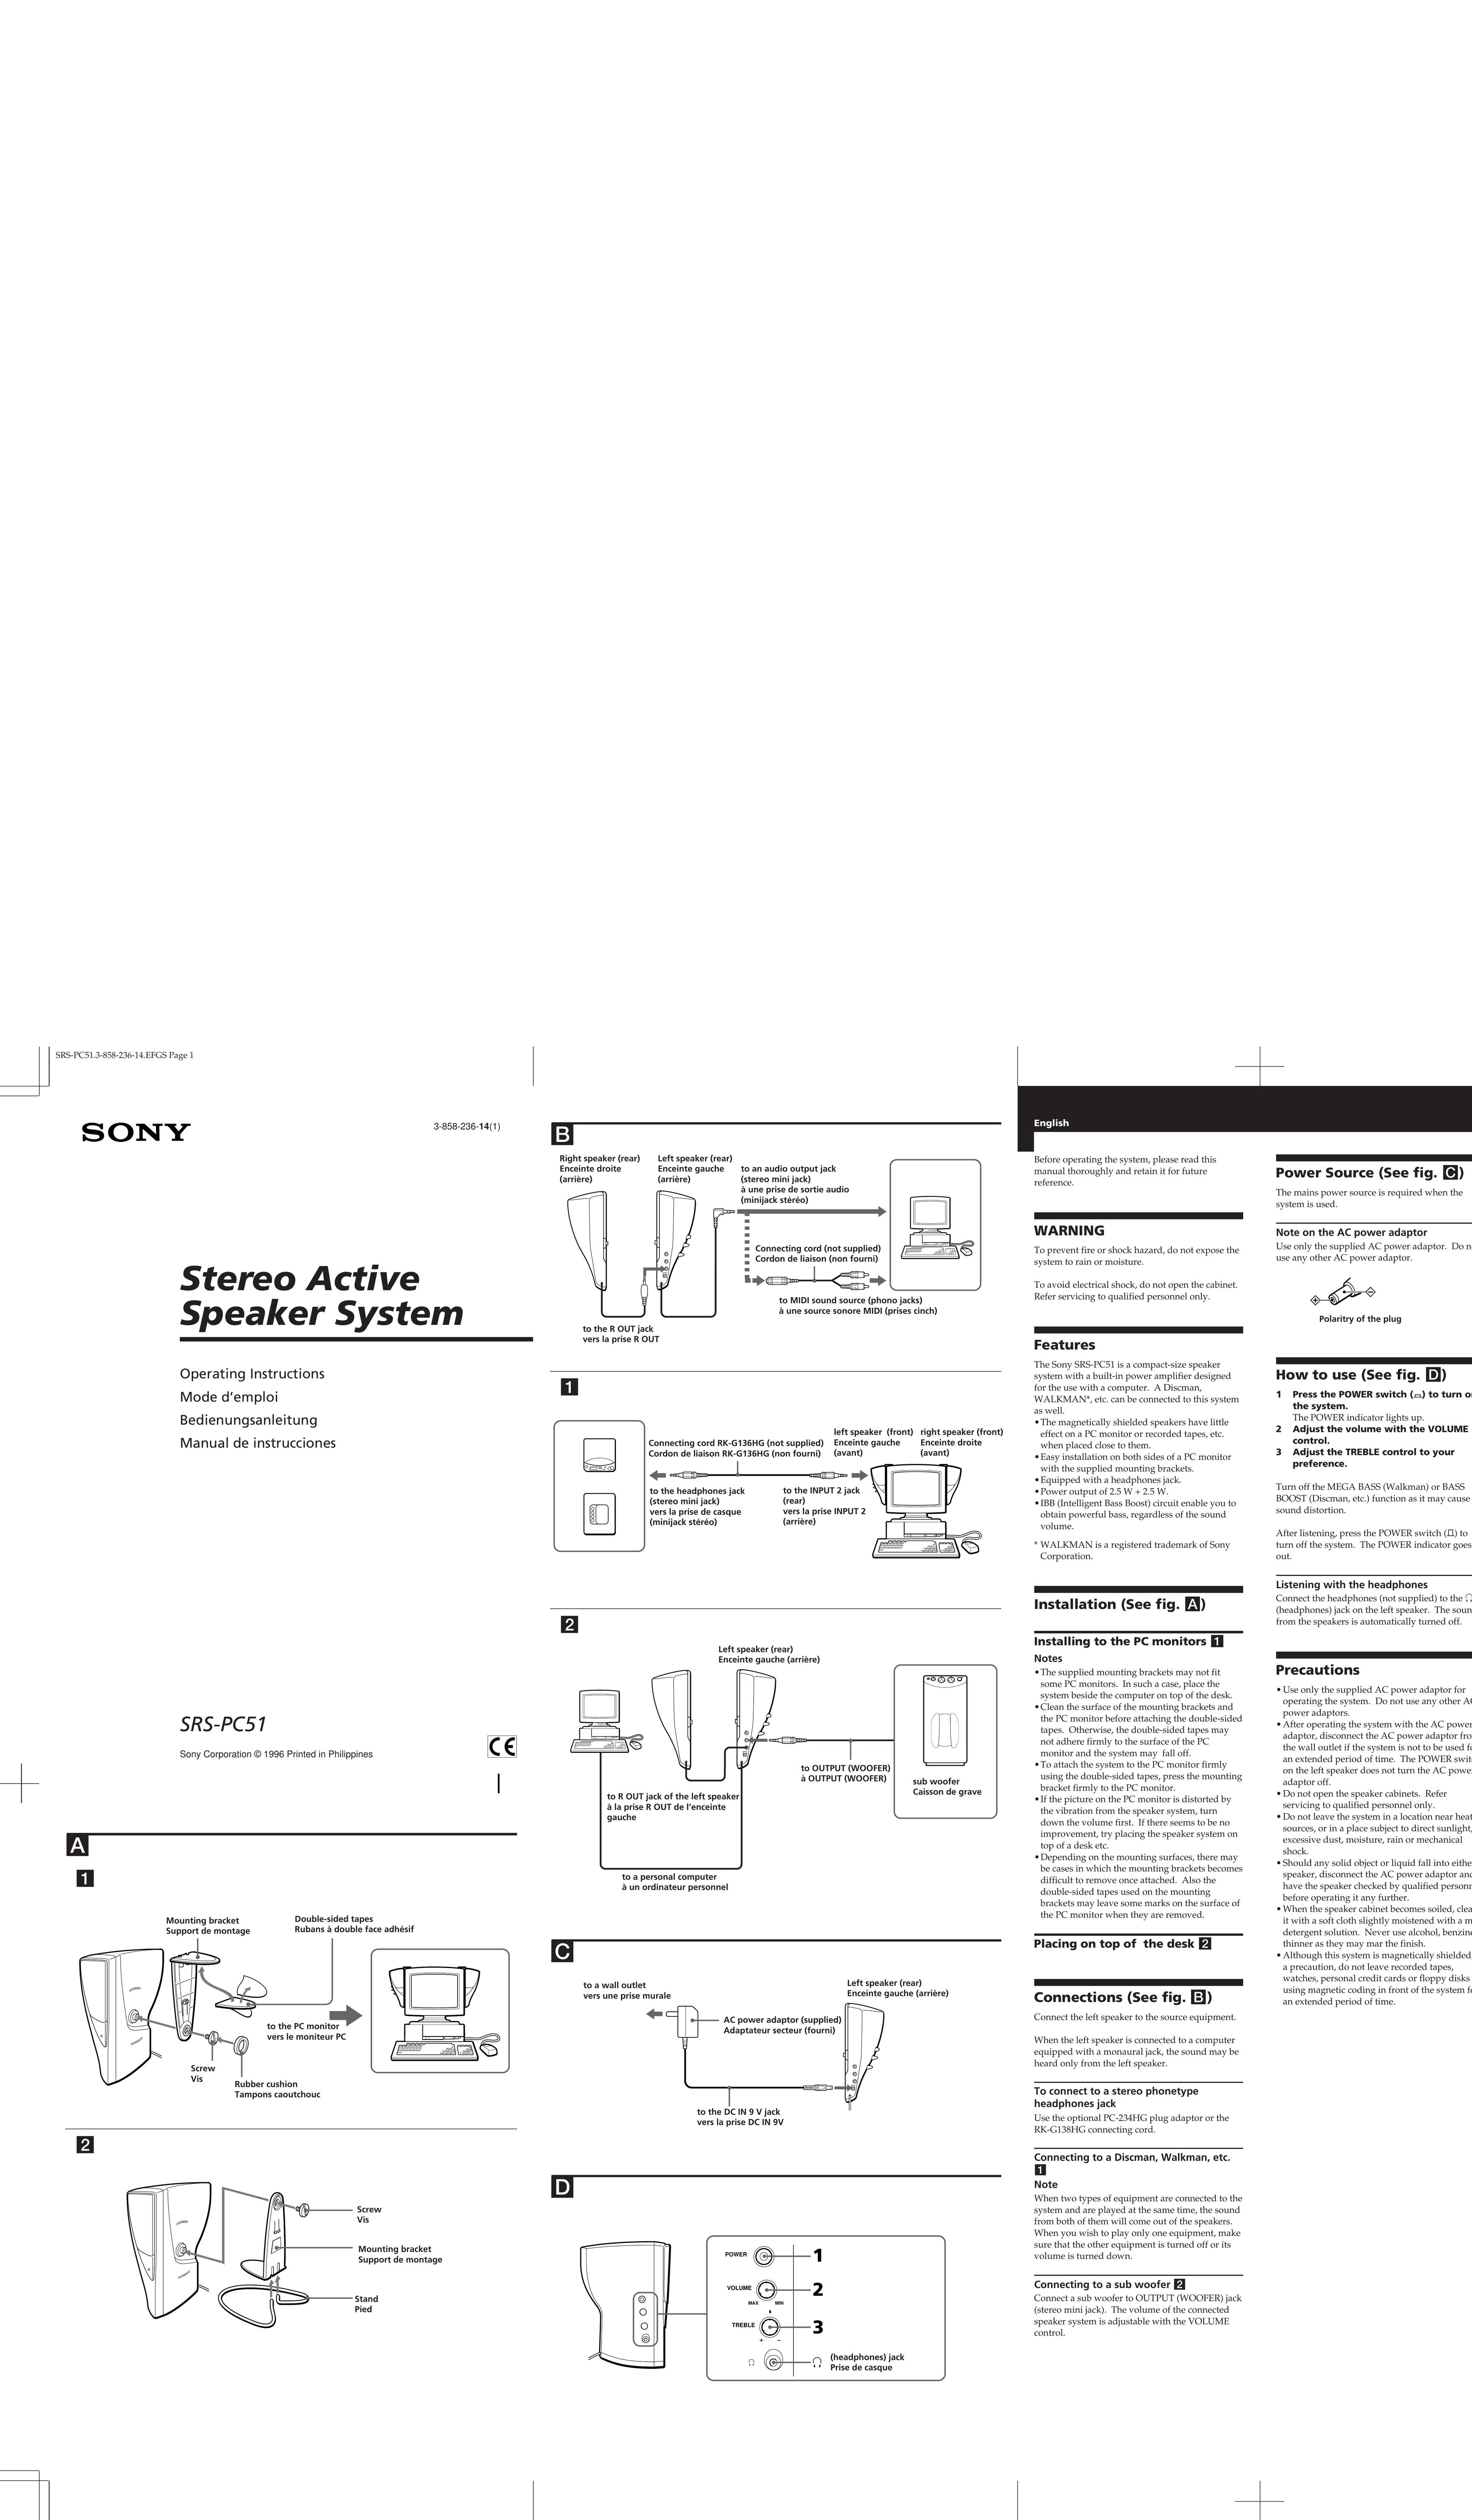 Sony SRSPC51 Portable Speaker User Manual